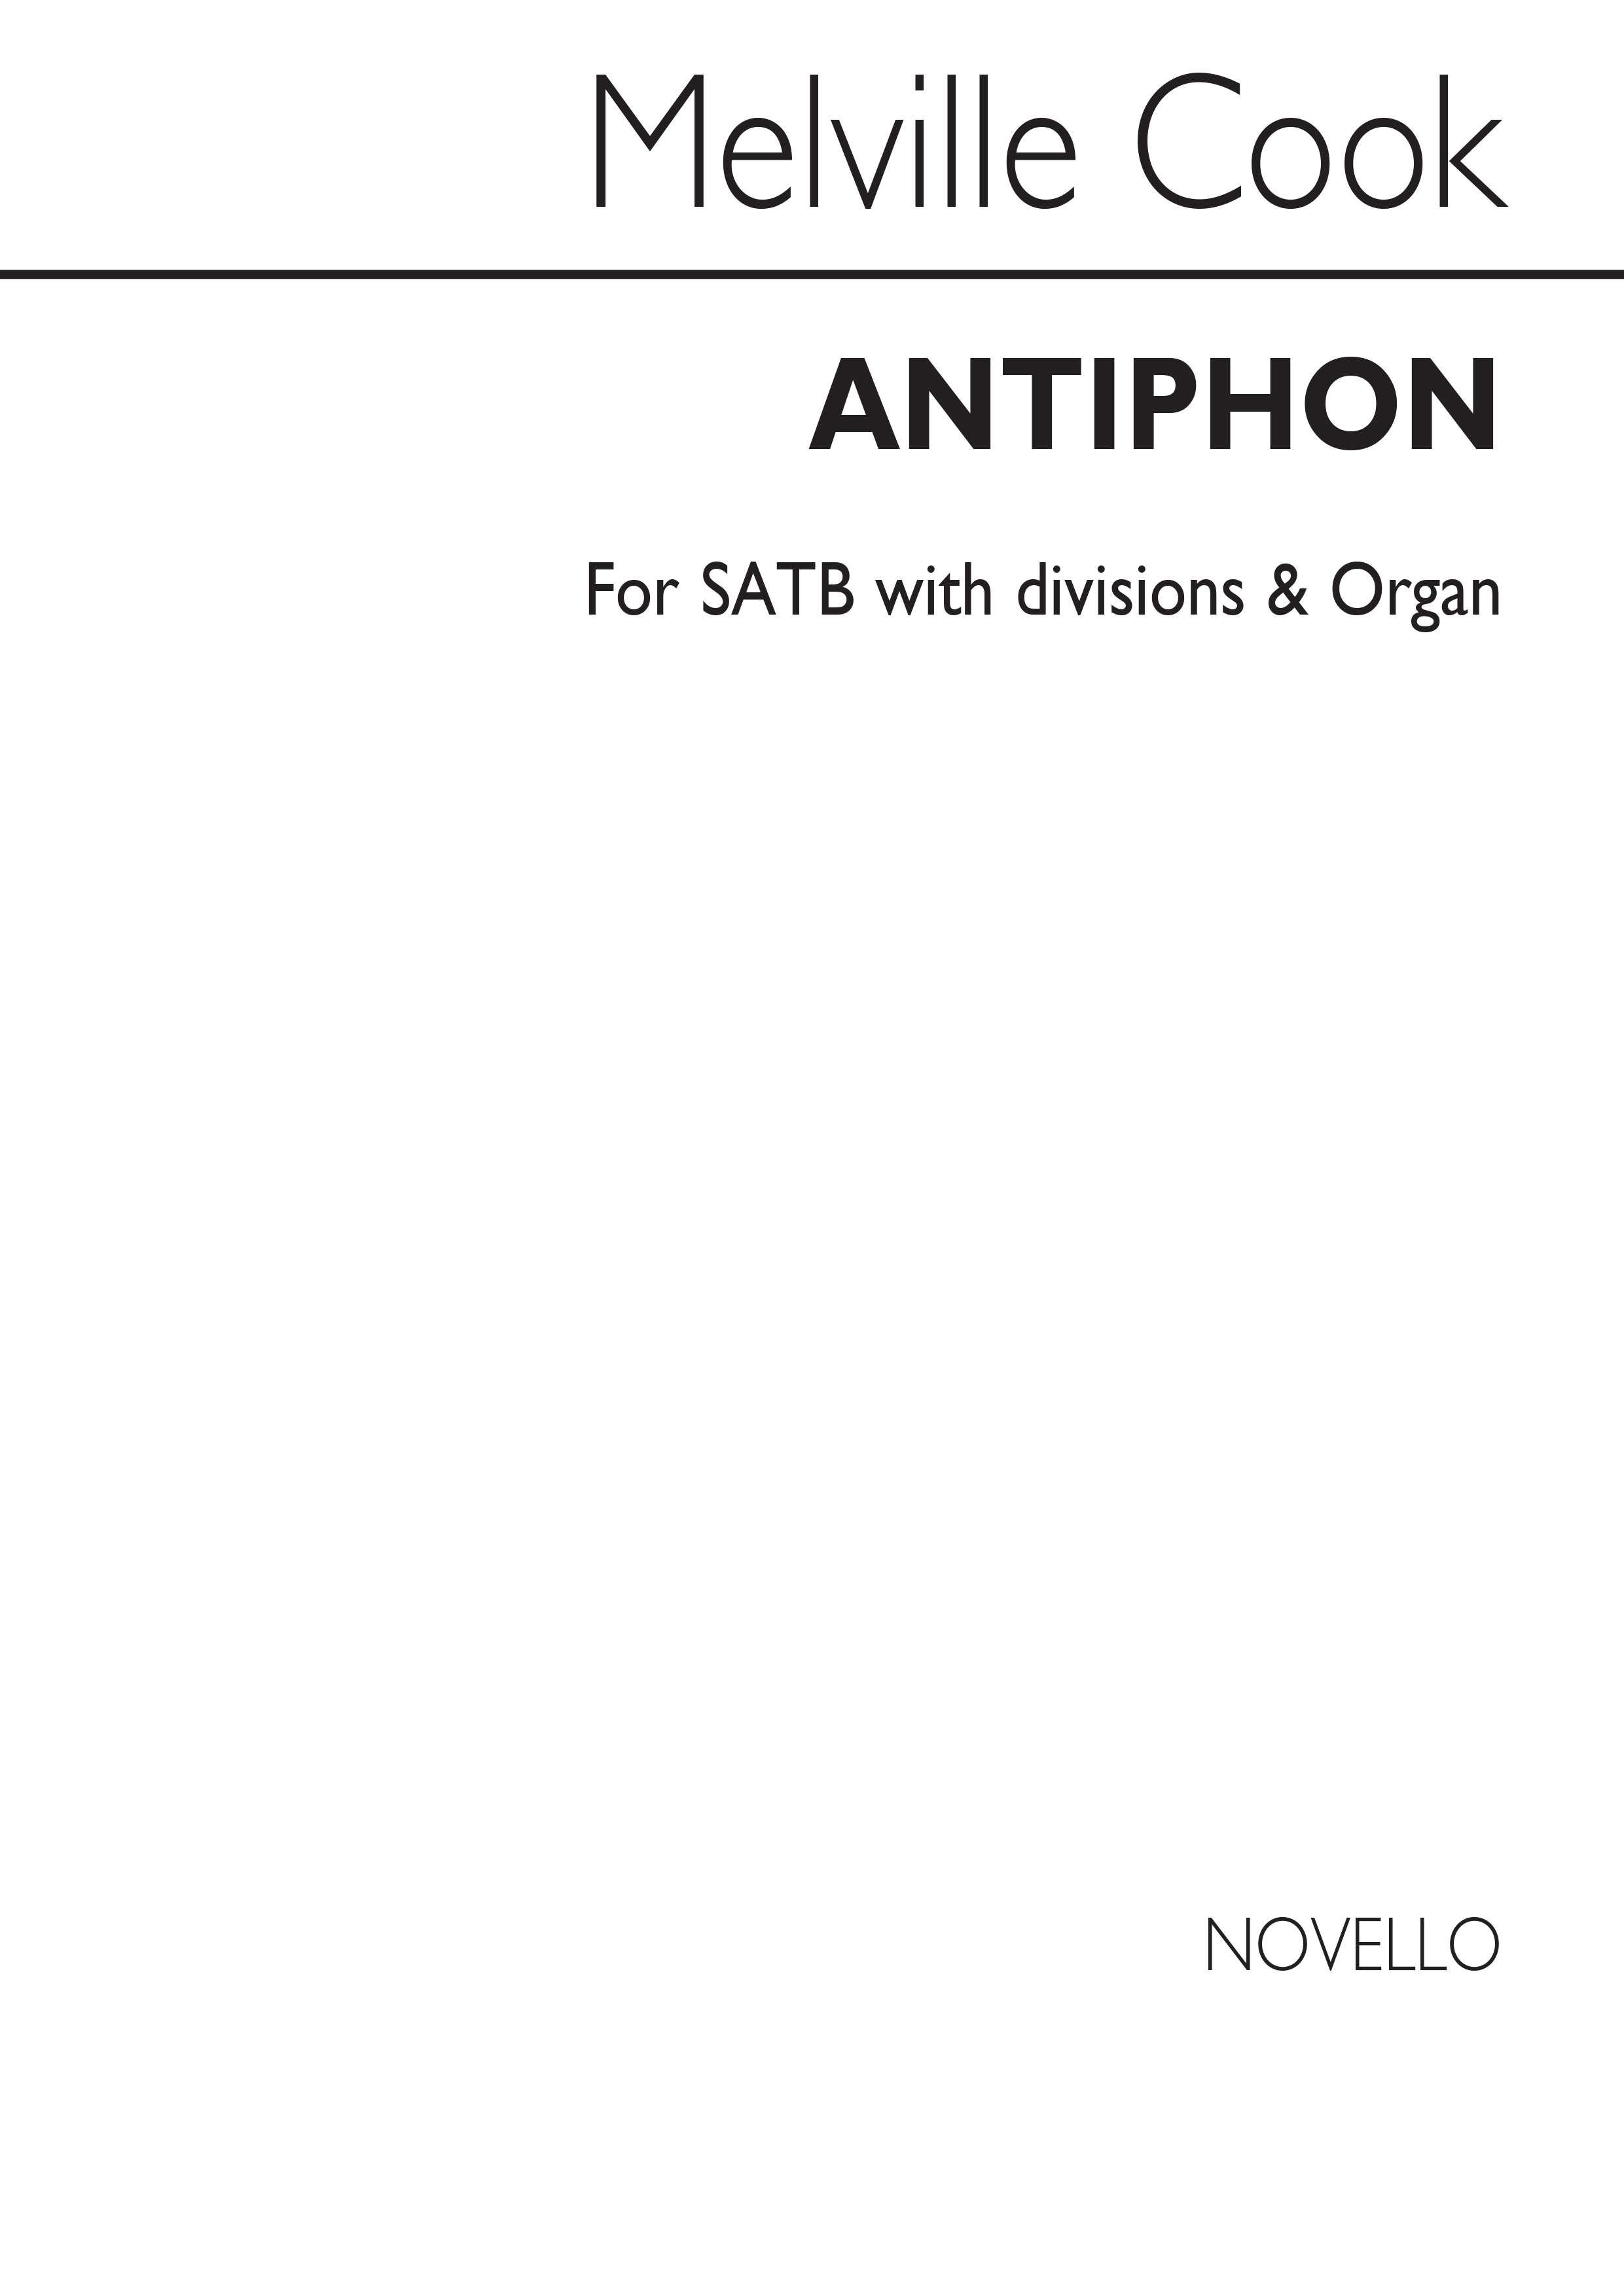 Edgar Thomas Cook: Antiphon for SATB Chorus and Organ